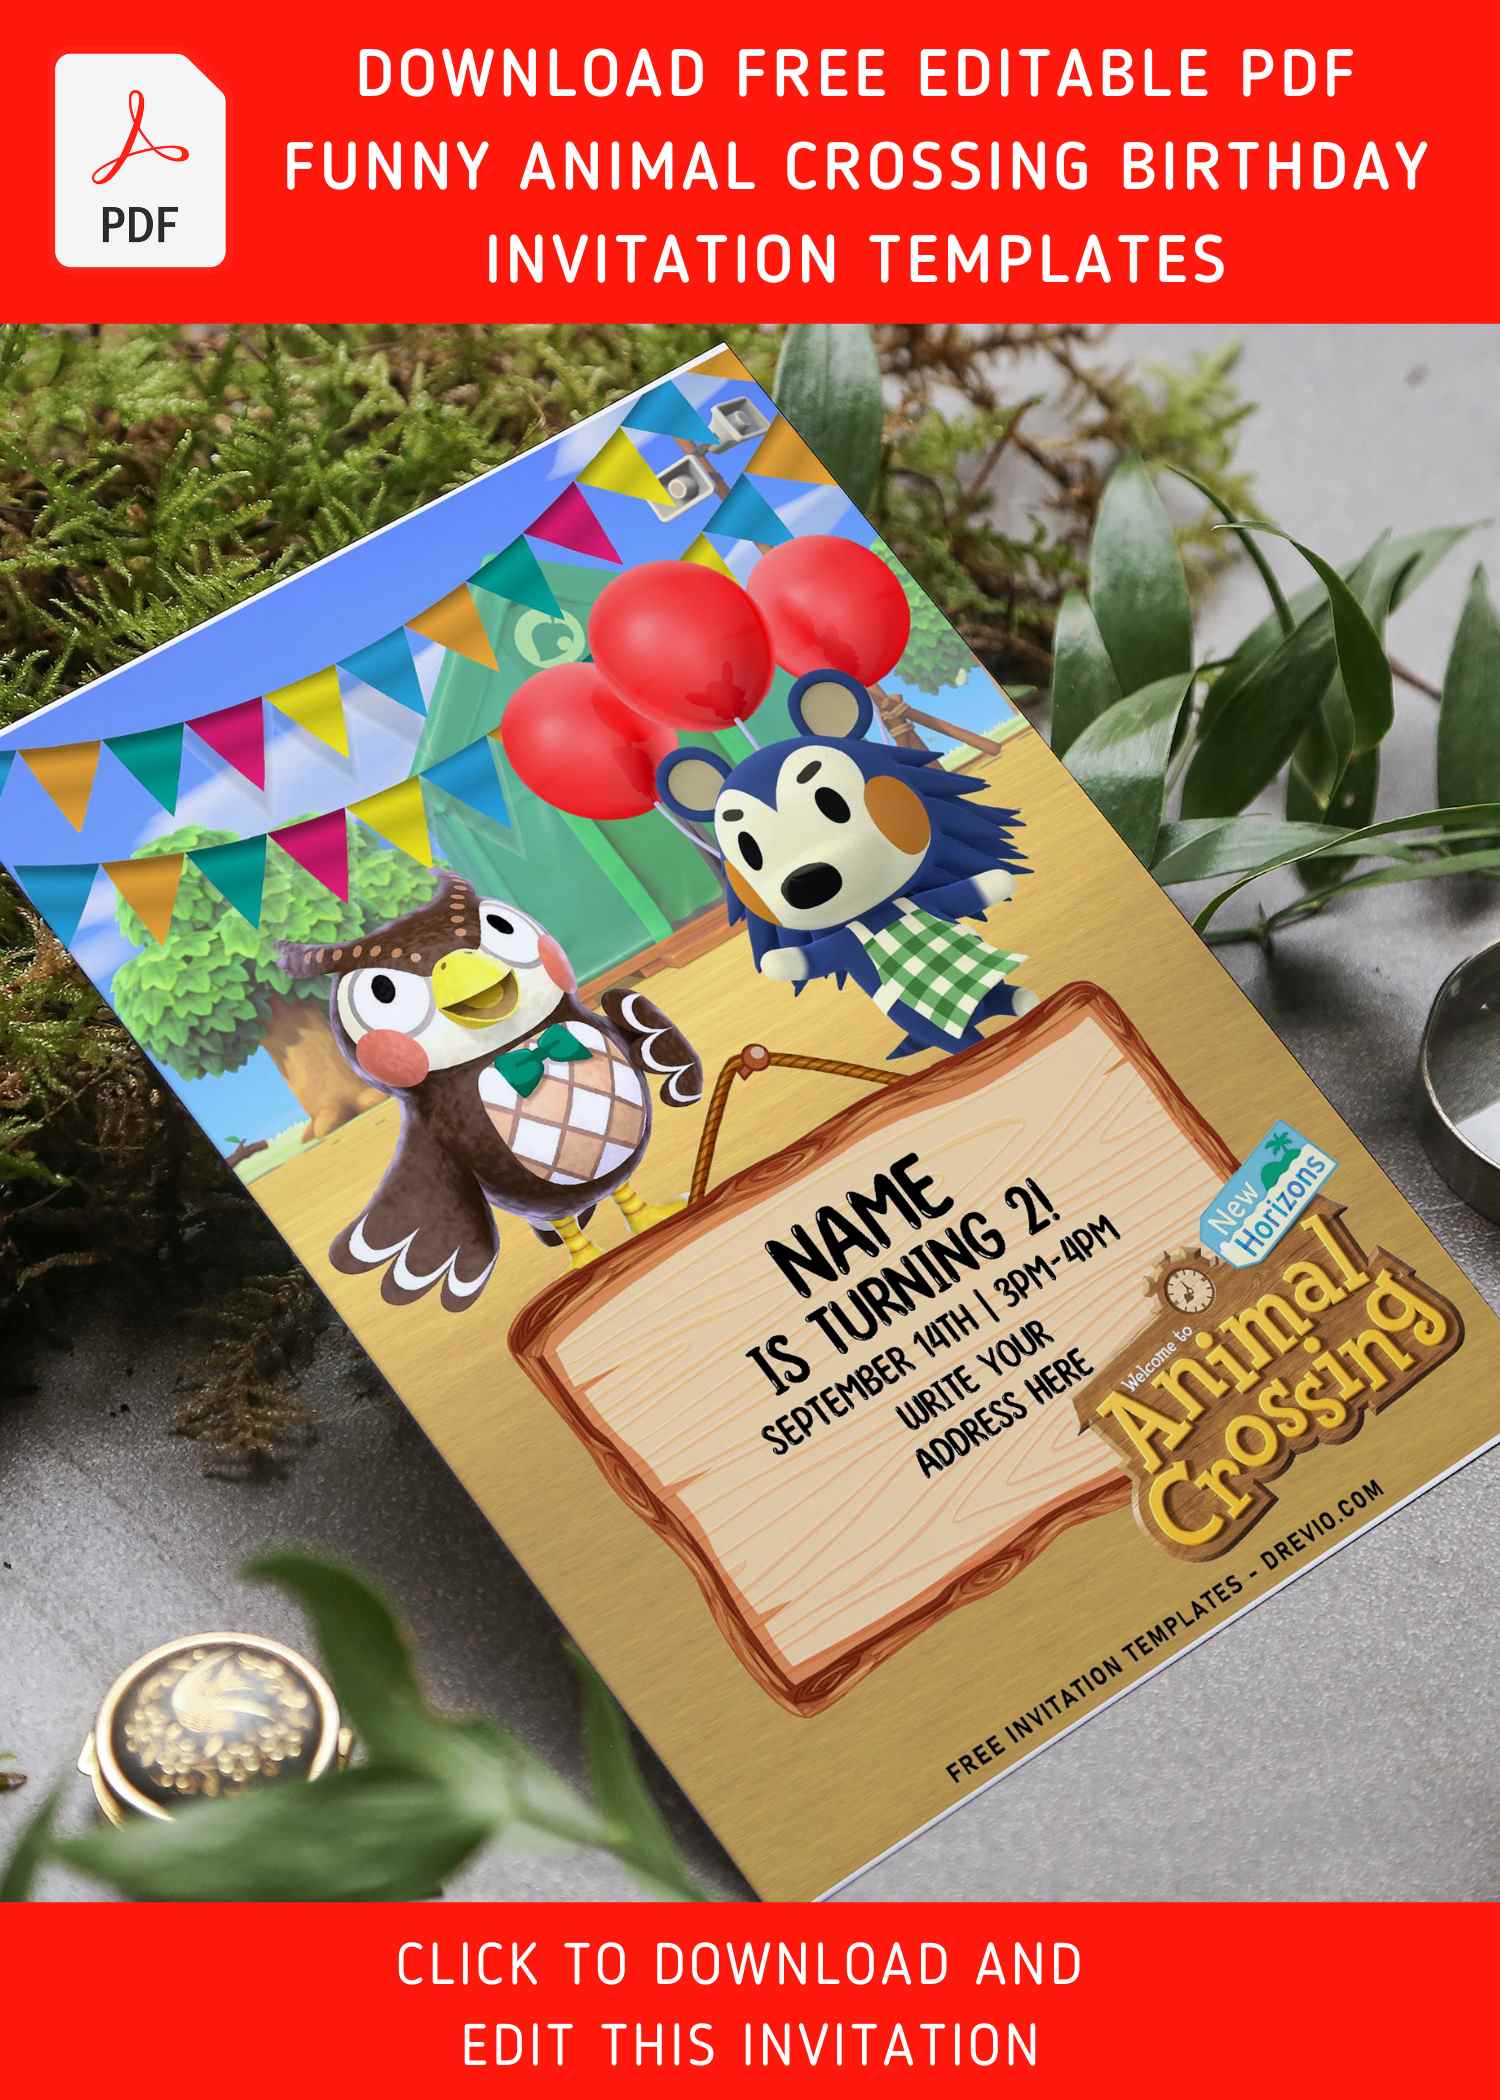 Free Editable PDF) Funny Animal Crossing Birthday Invitation Templates |  Download Hundreds FREE PRINTABLE Birthday Invitation Templates